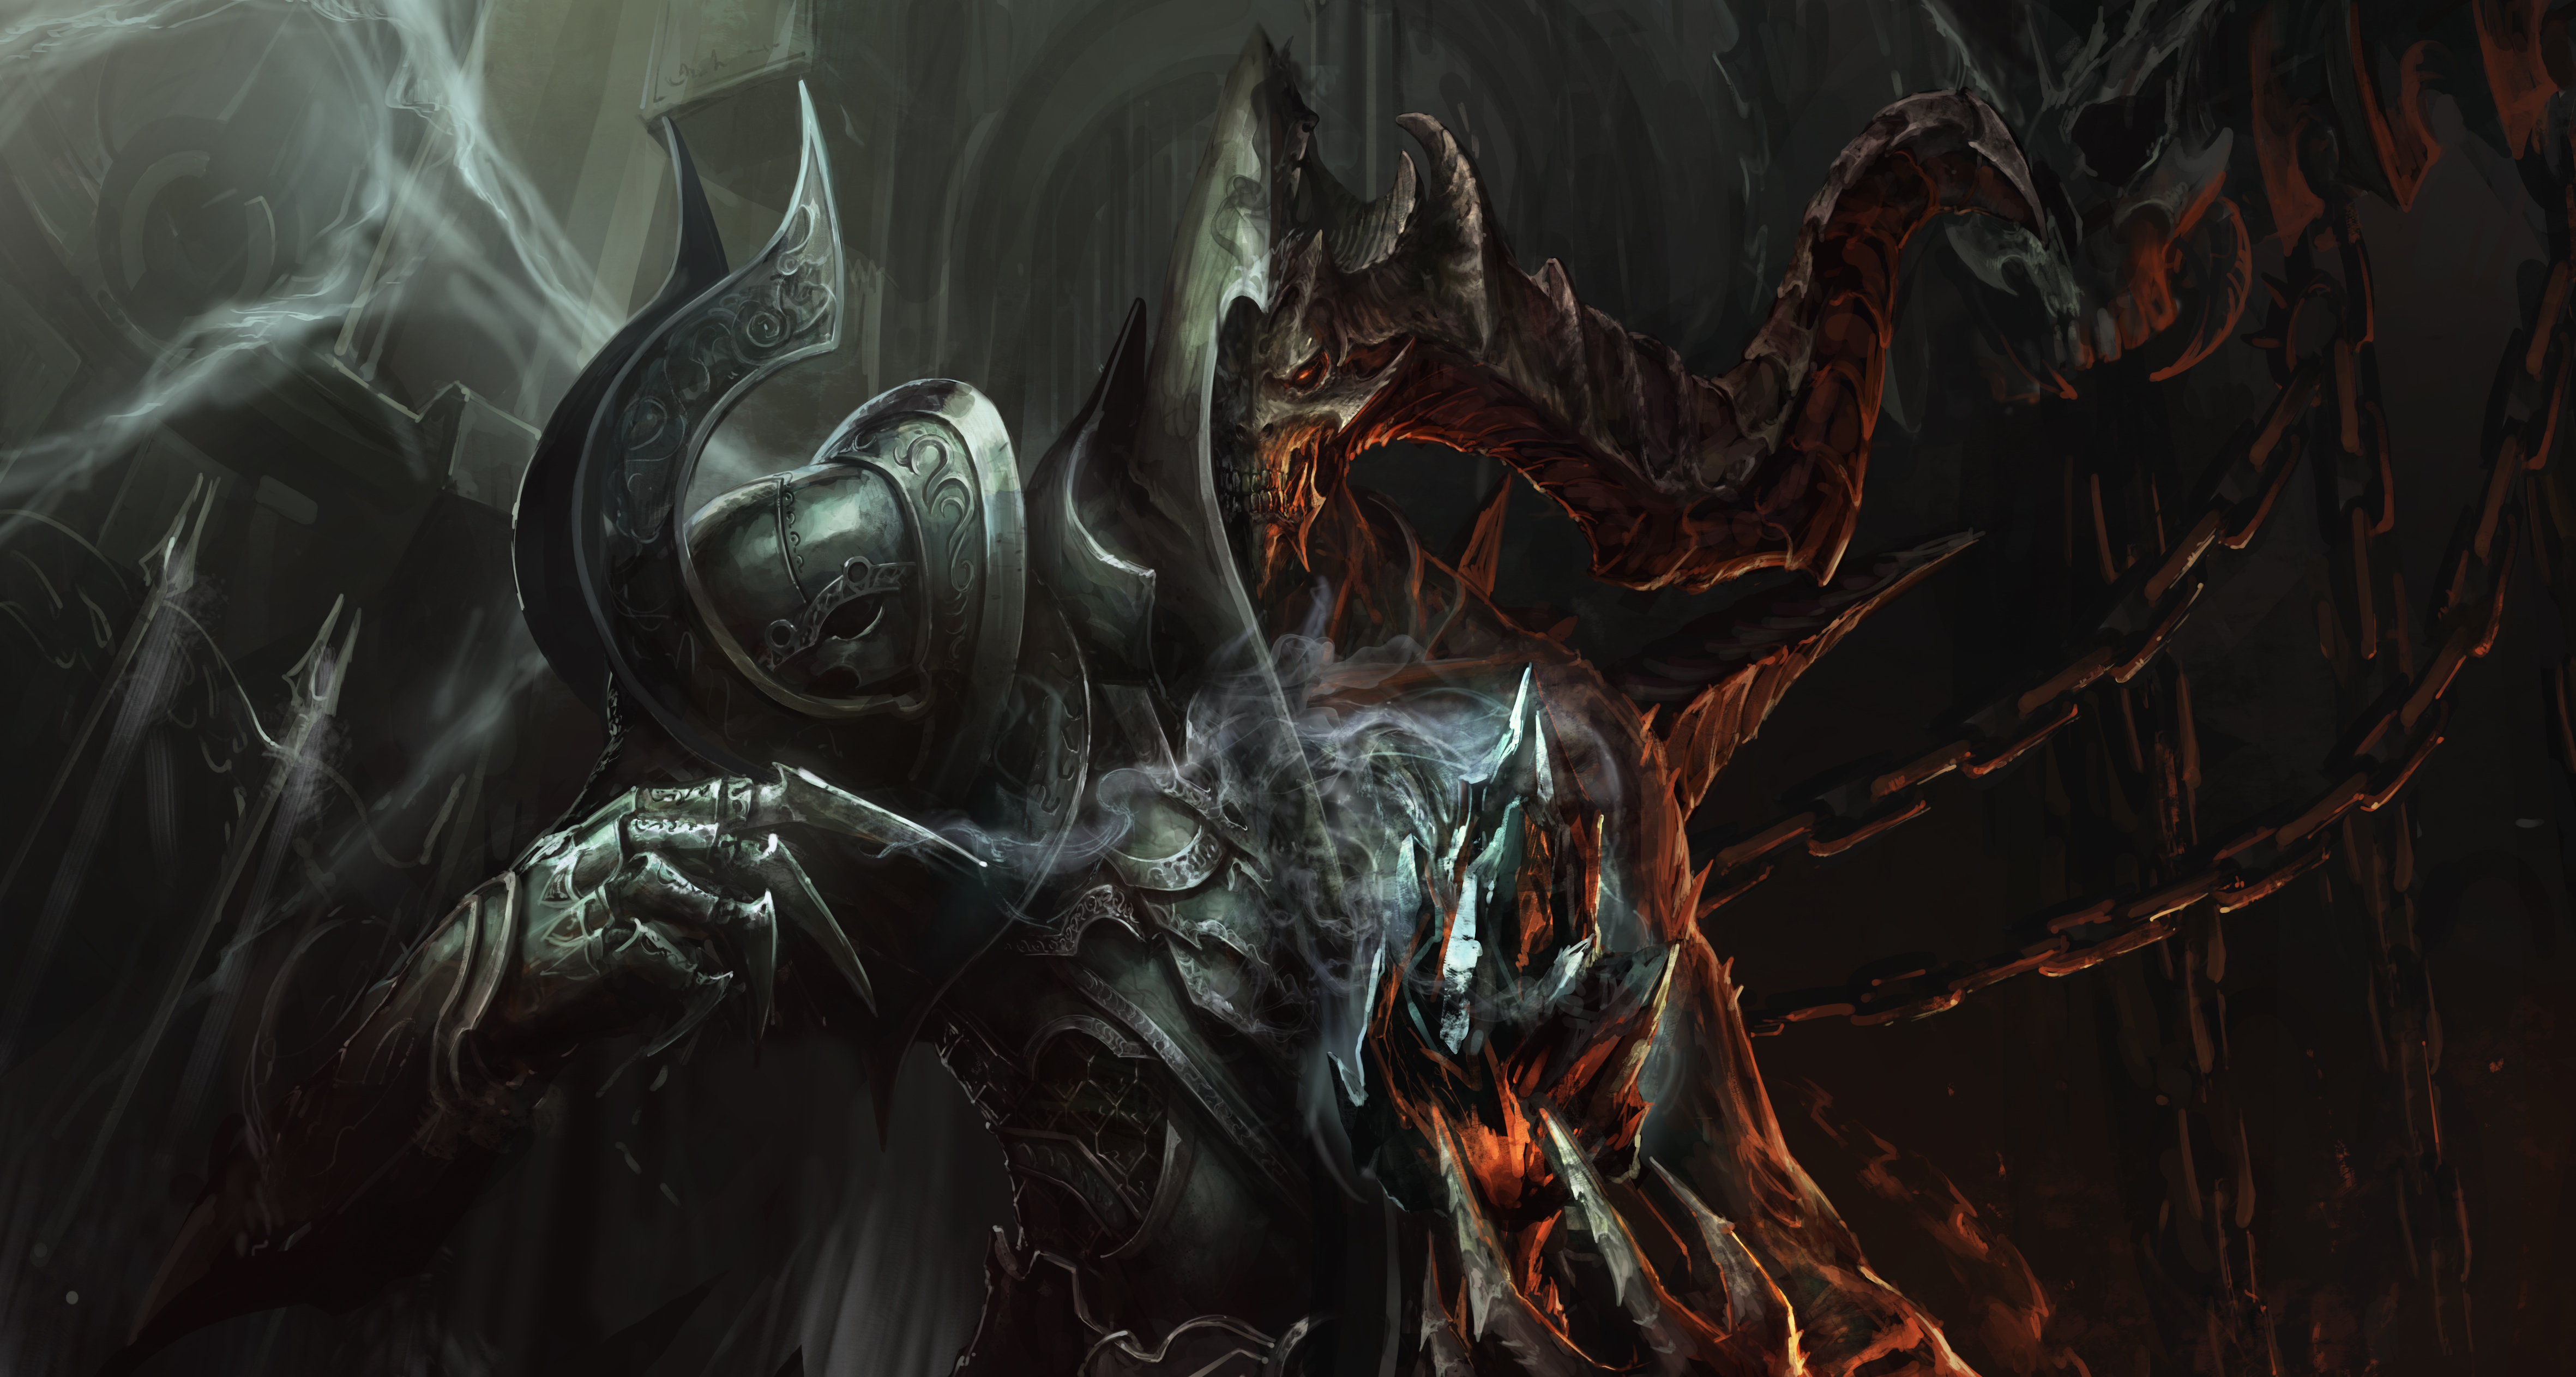 Diablo III: Reaper Of Souls 4k Ultra HD Wallpaper and Background Image